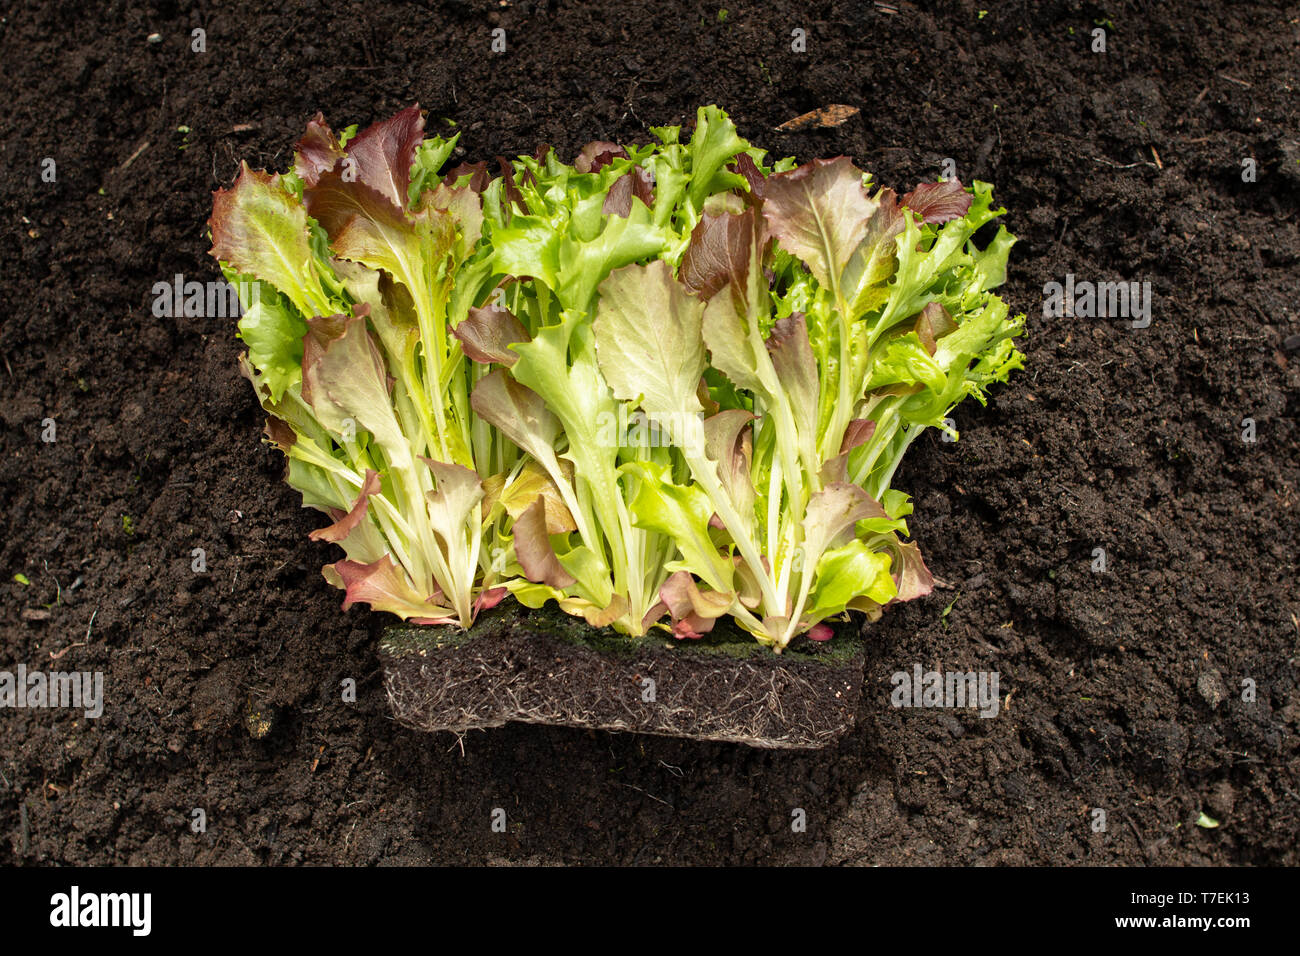 planting living baby lettuce salad into garden see also images T7EK11 and T7EK14 Stock Photo